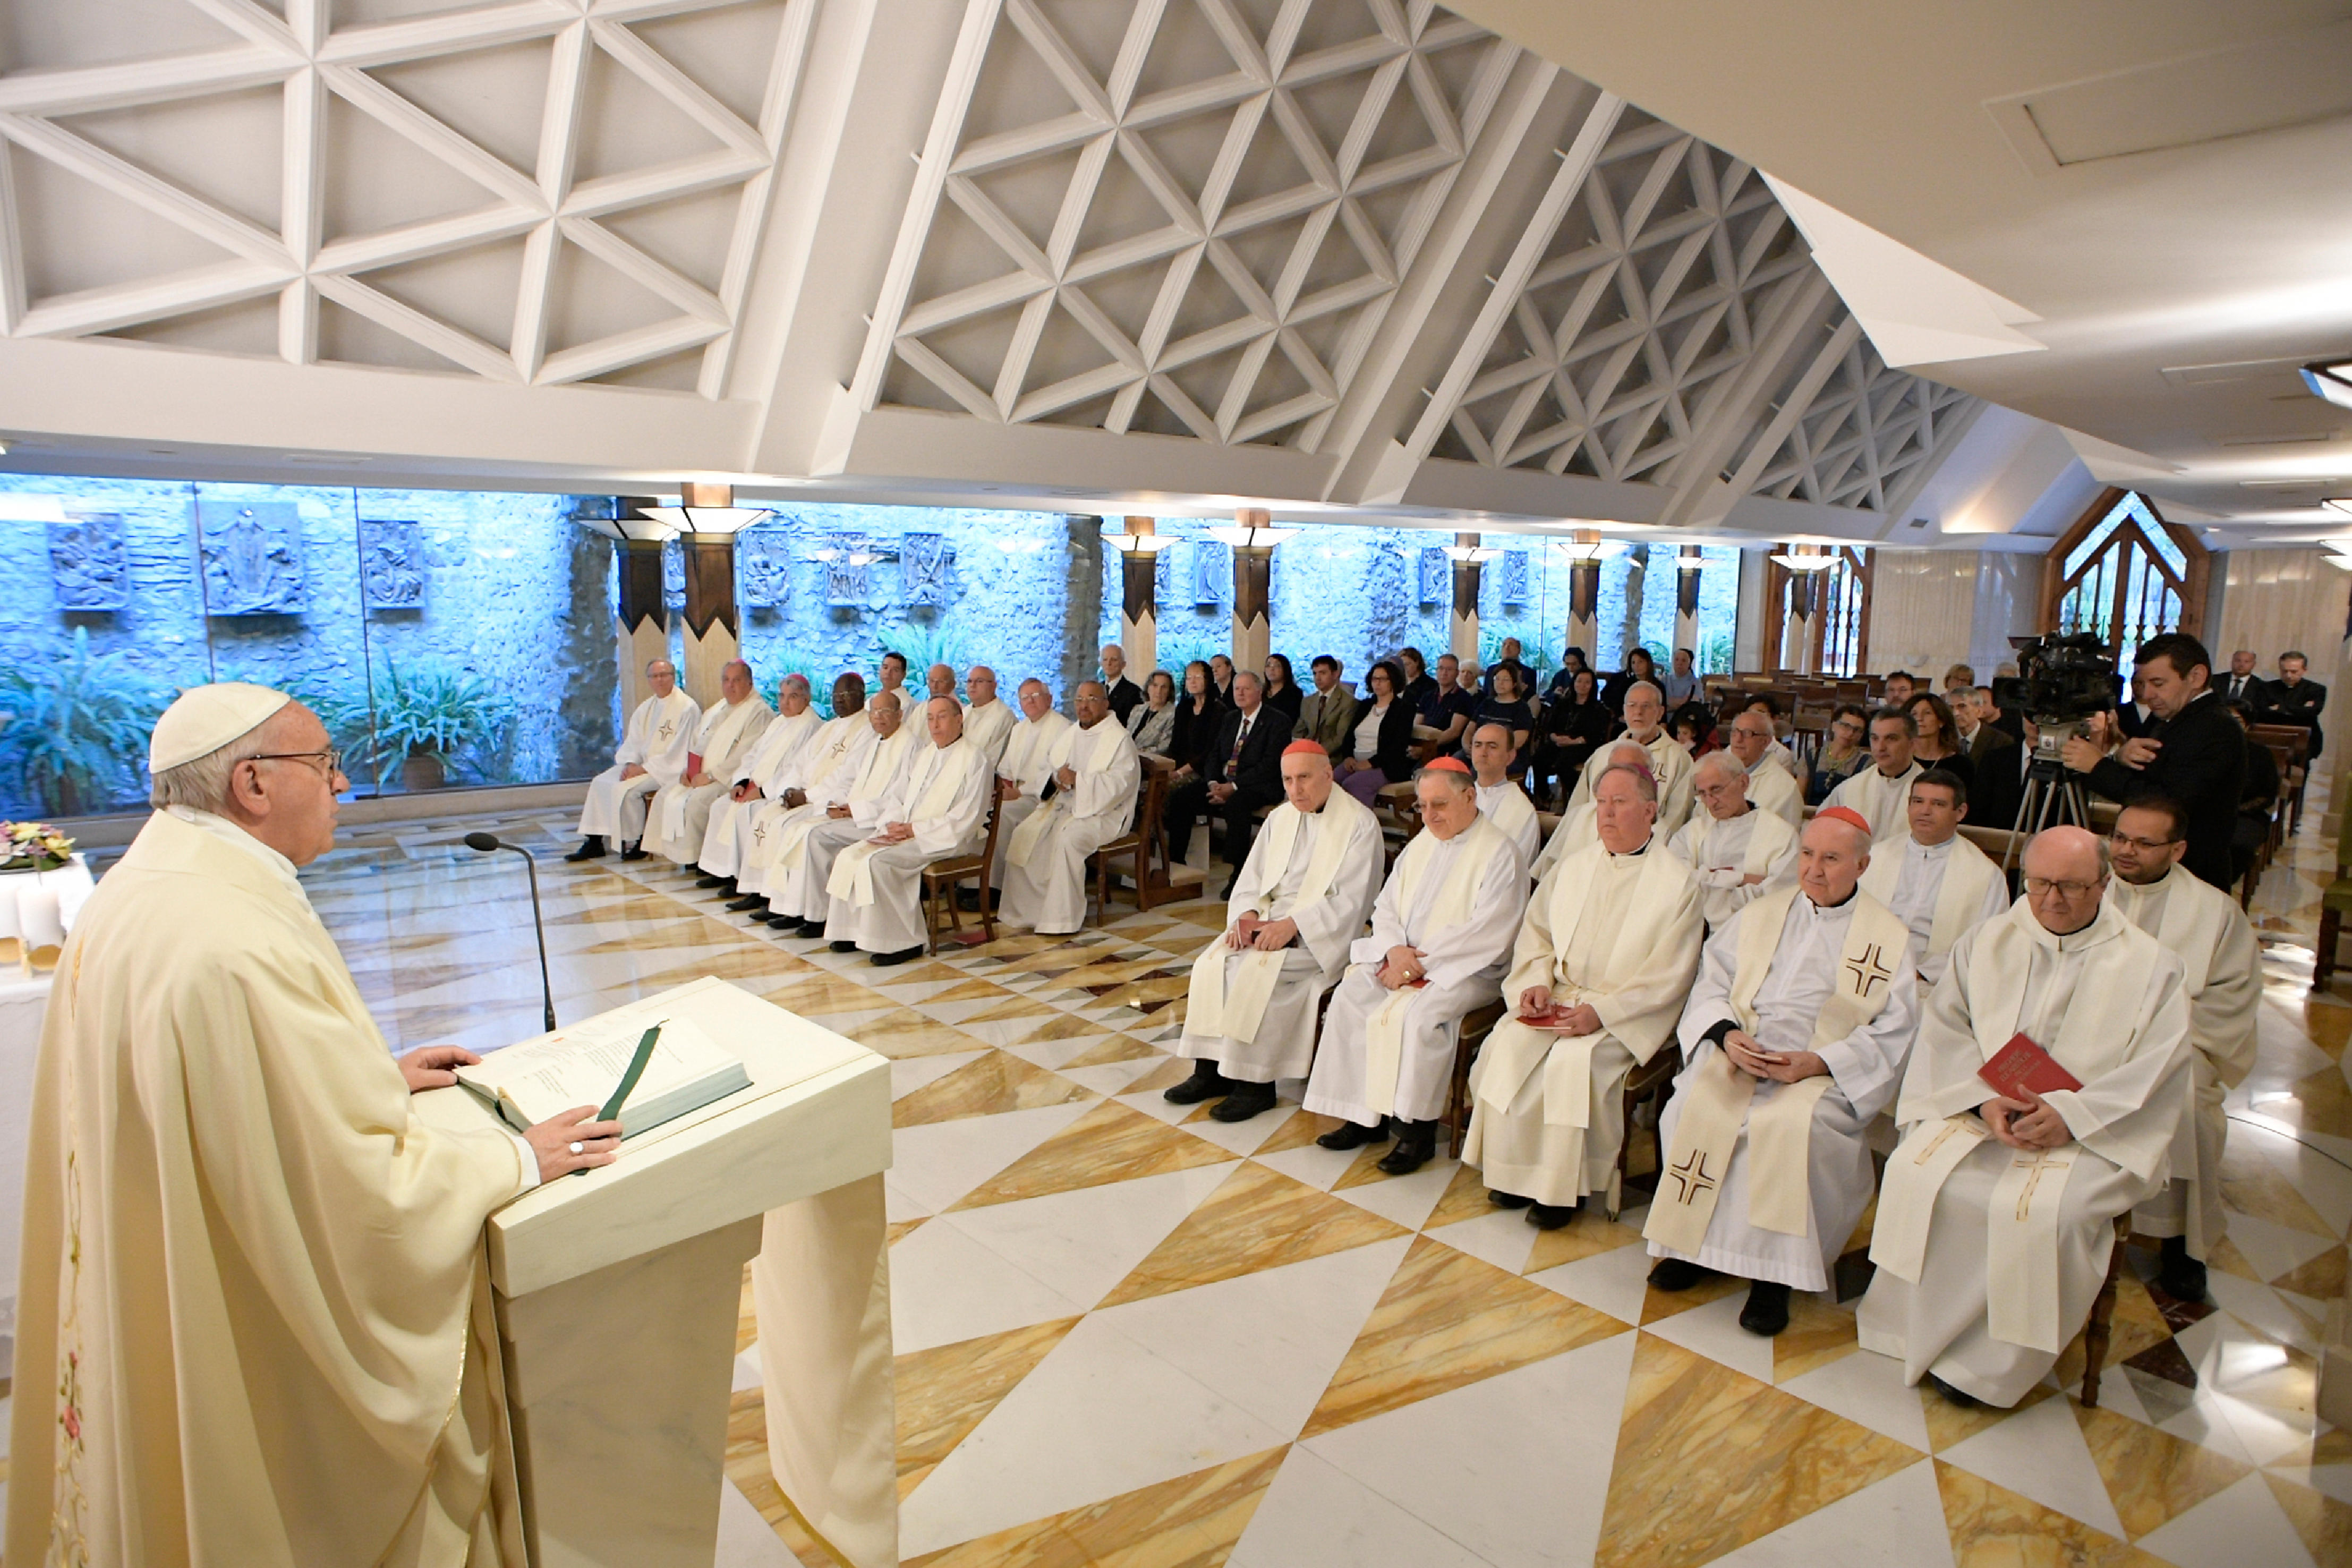 Messe à Ste-Marthe du 26 juin 2017 © L'Osservatore Romano